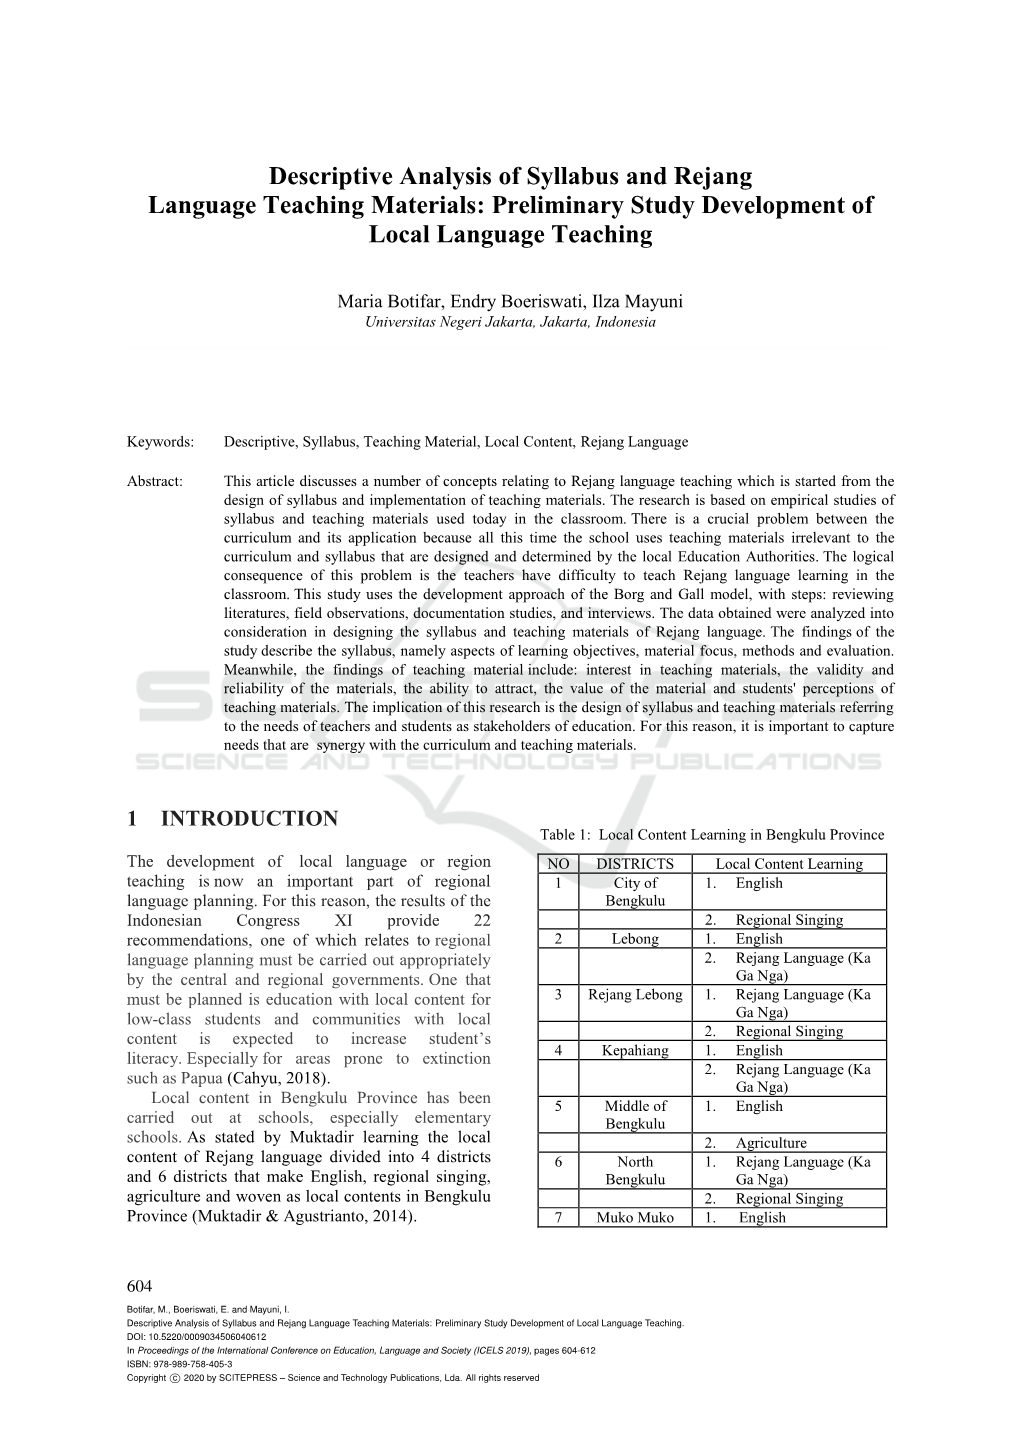 Descriptive Analysis of Syllabus and Rejang Language Teaching Materials: Preliminary Study Development of Local Language Teaching